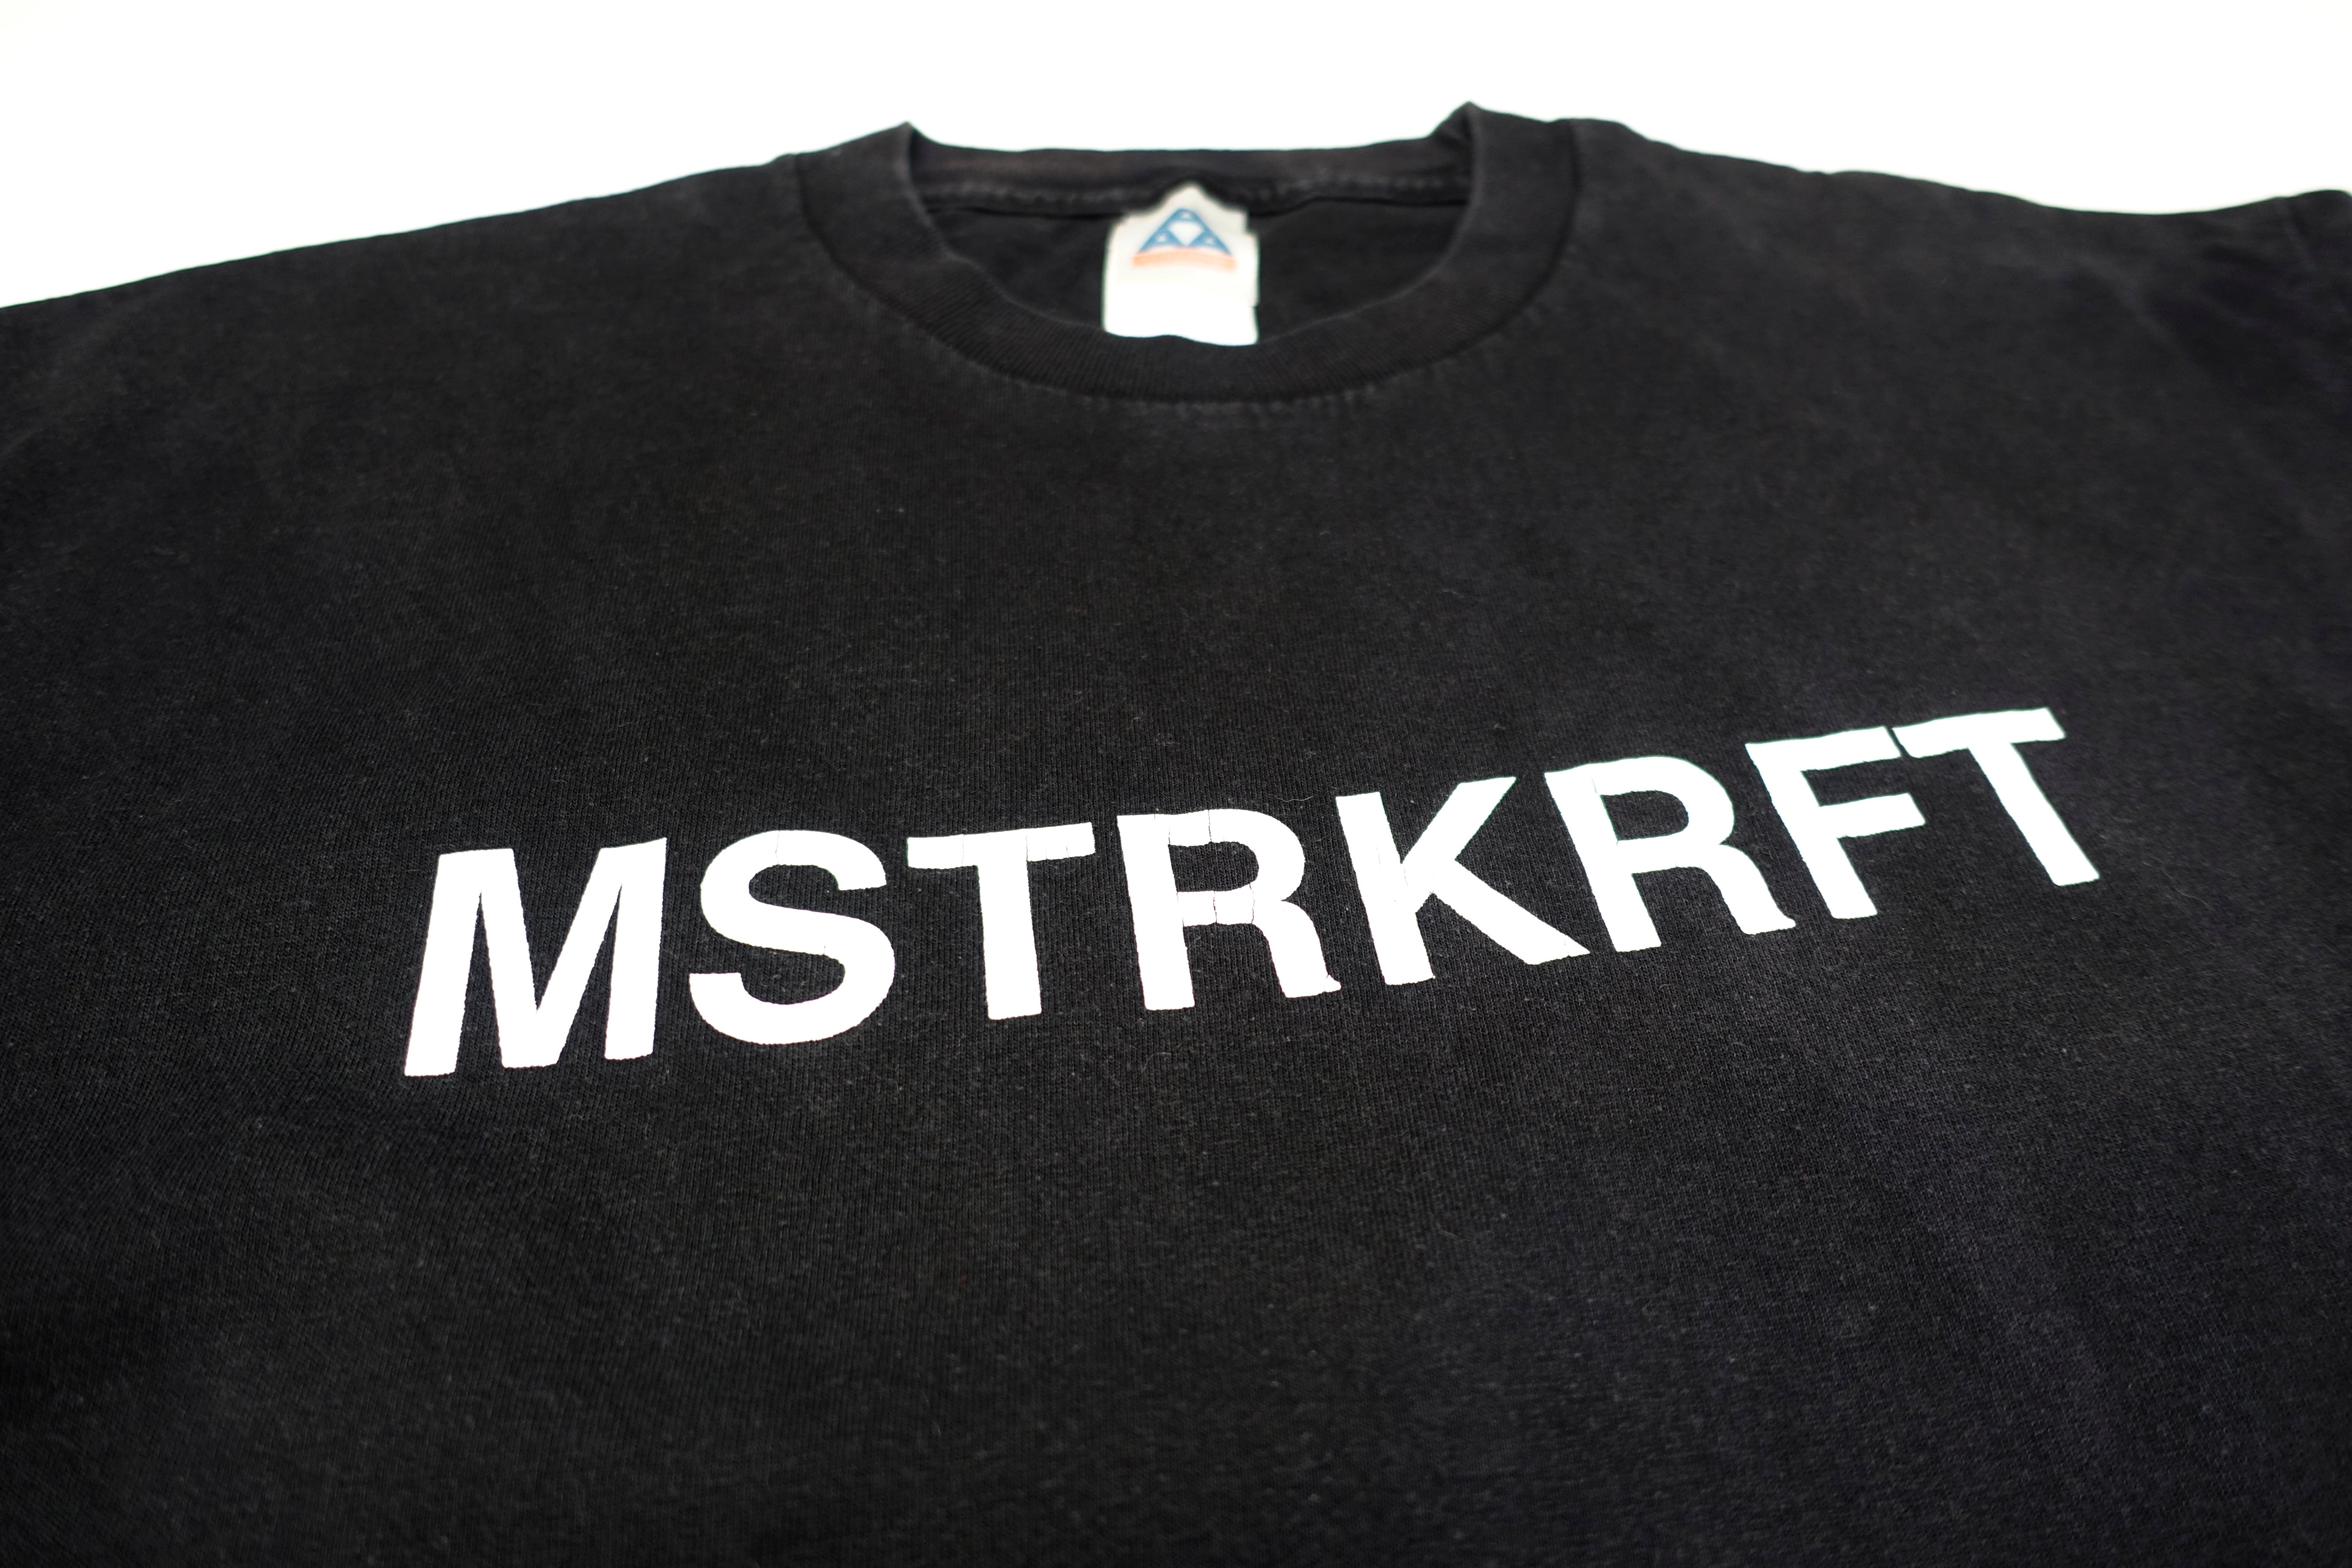 MSTRKRFT - the Look 2006 Tour Shirt Size Large